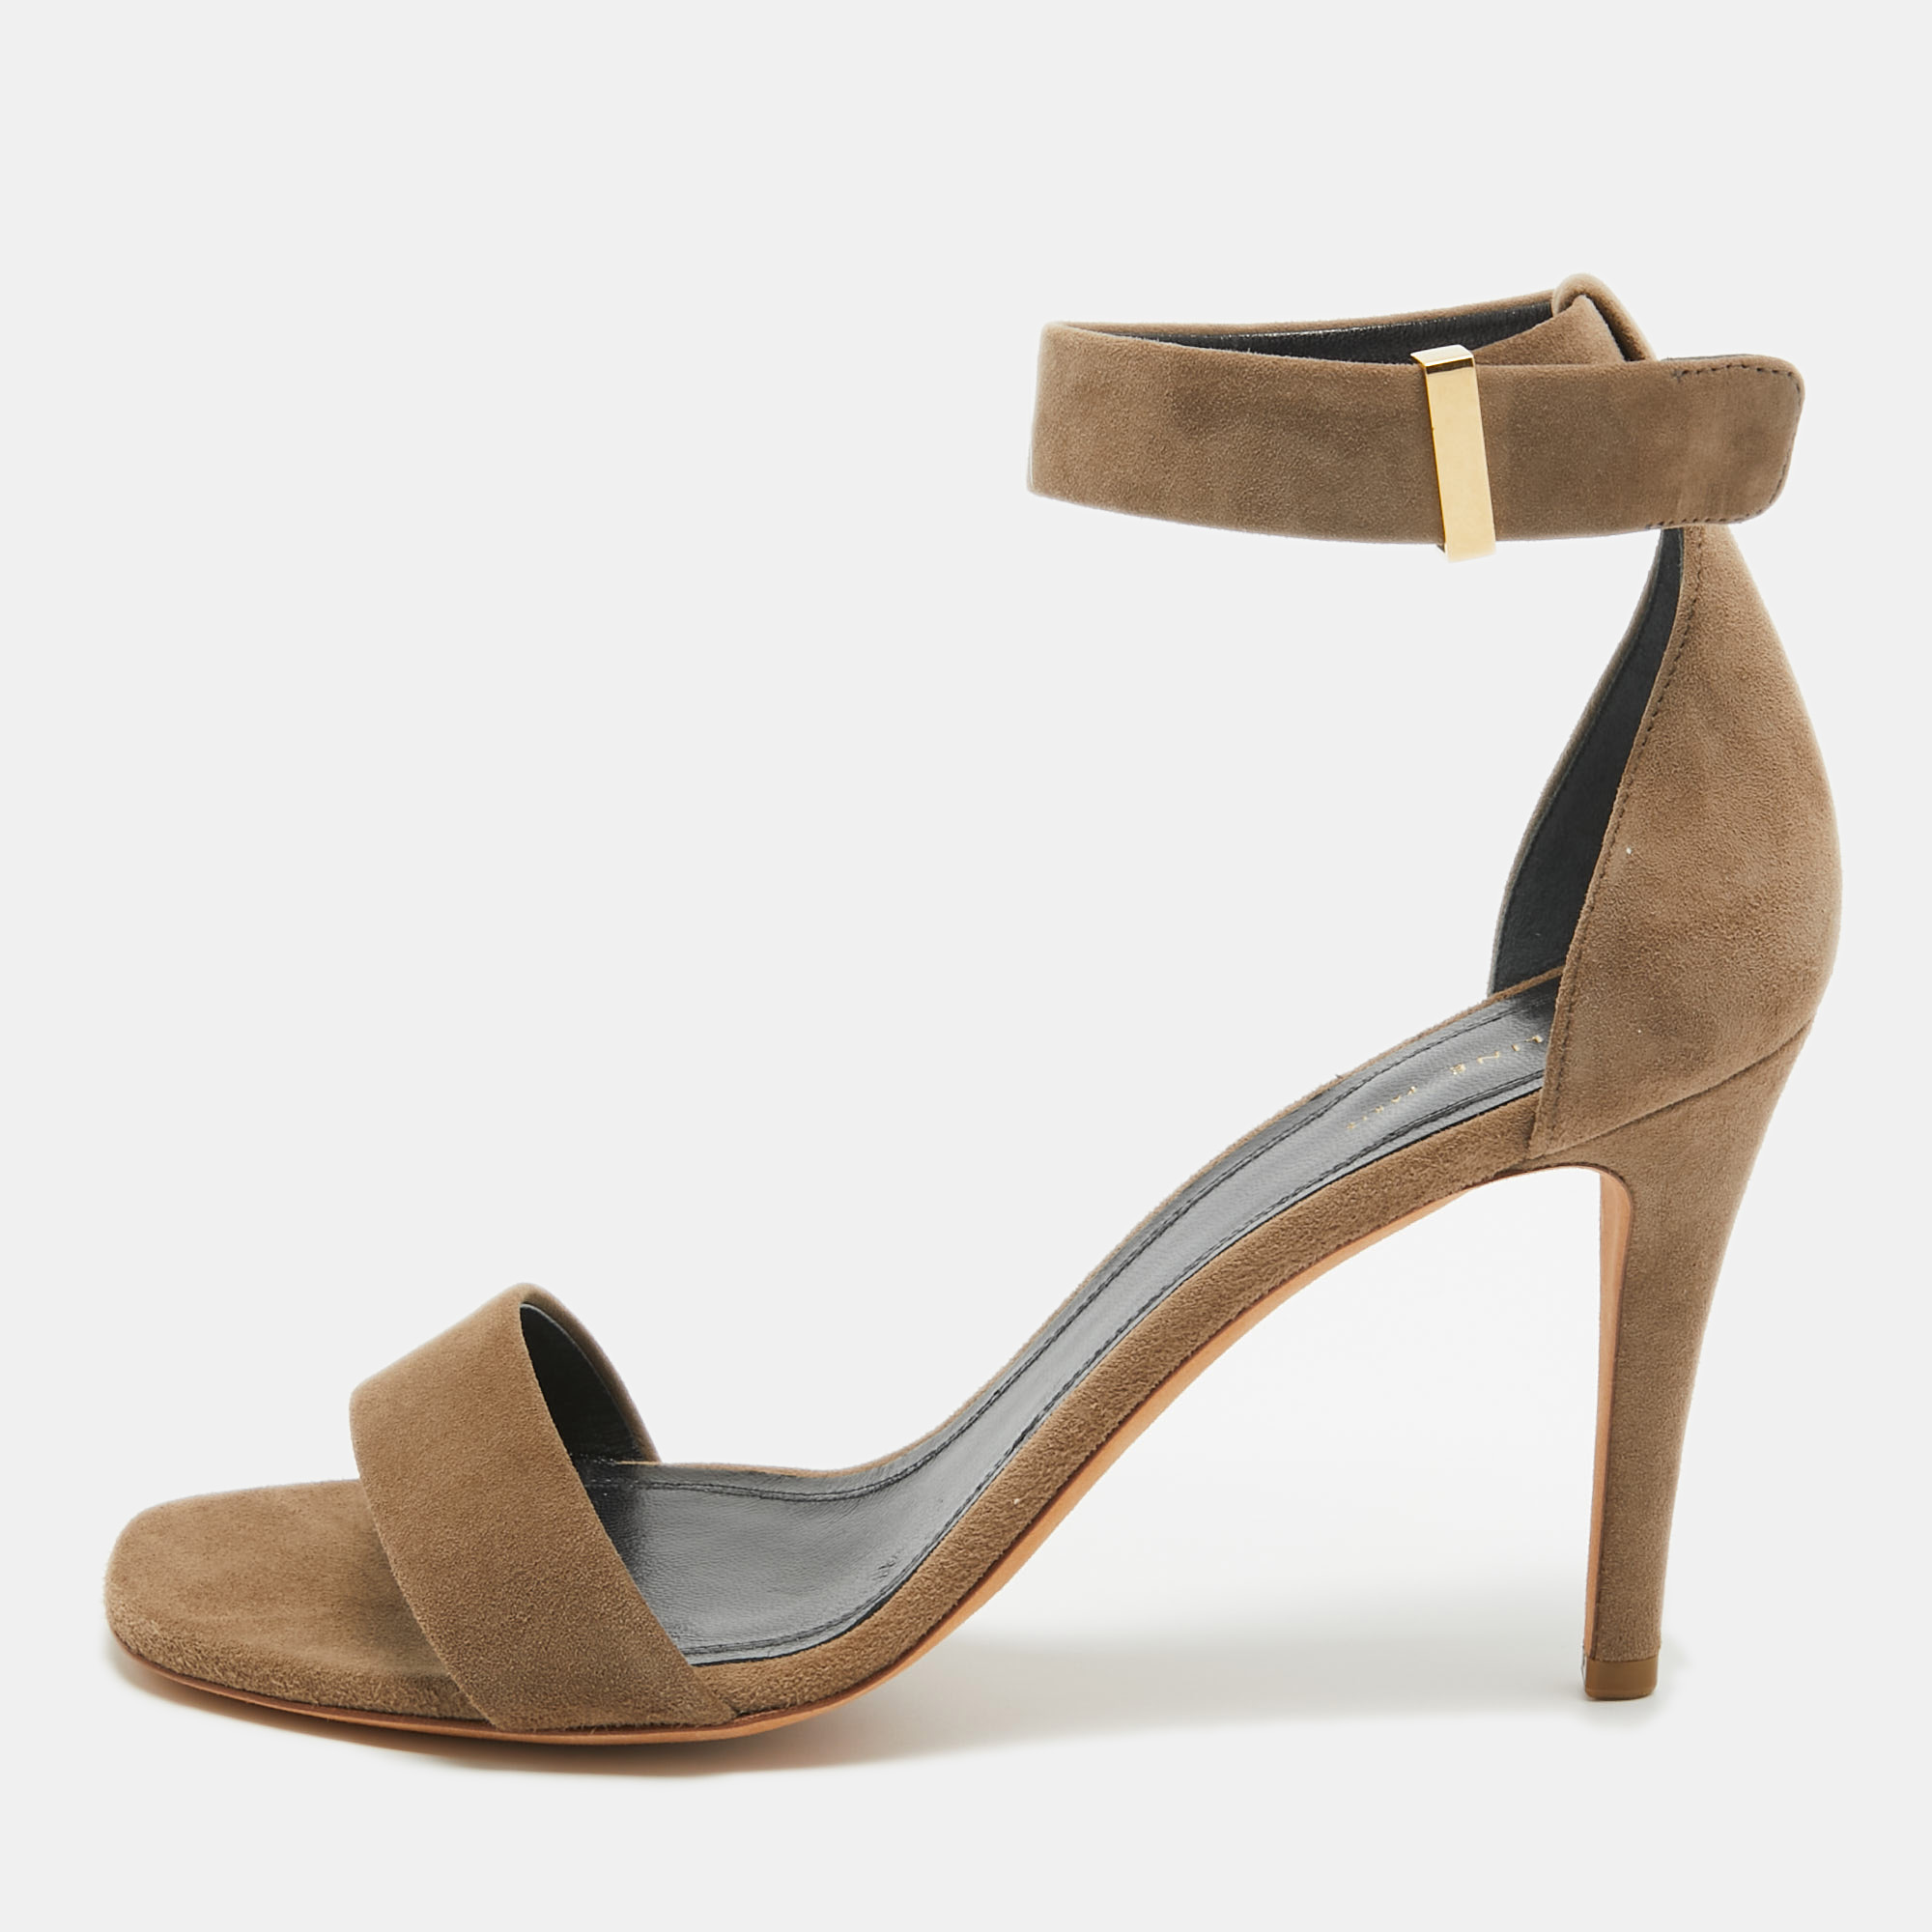 Celine grey suede ankle strap sandals size 38.5